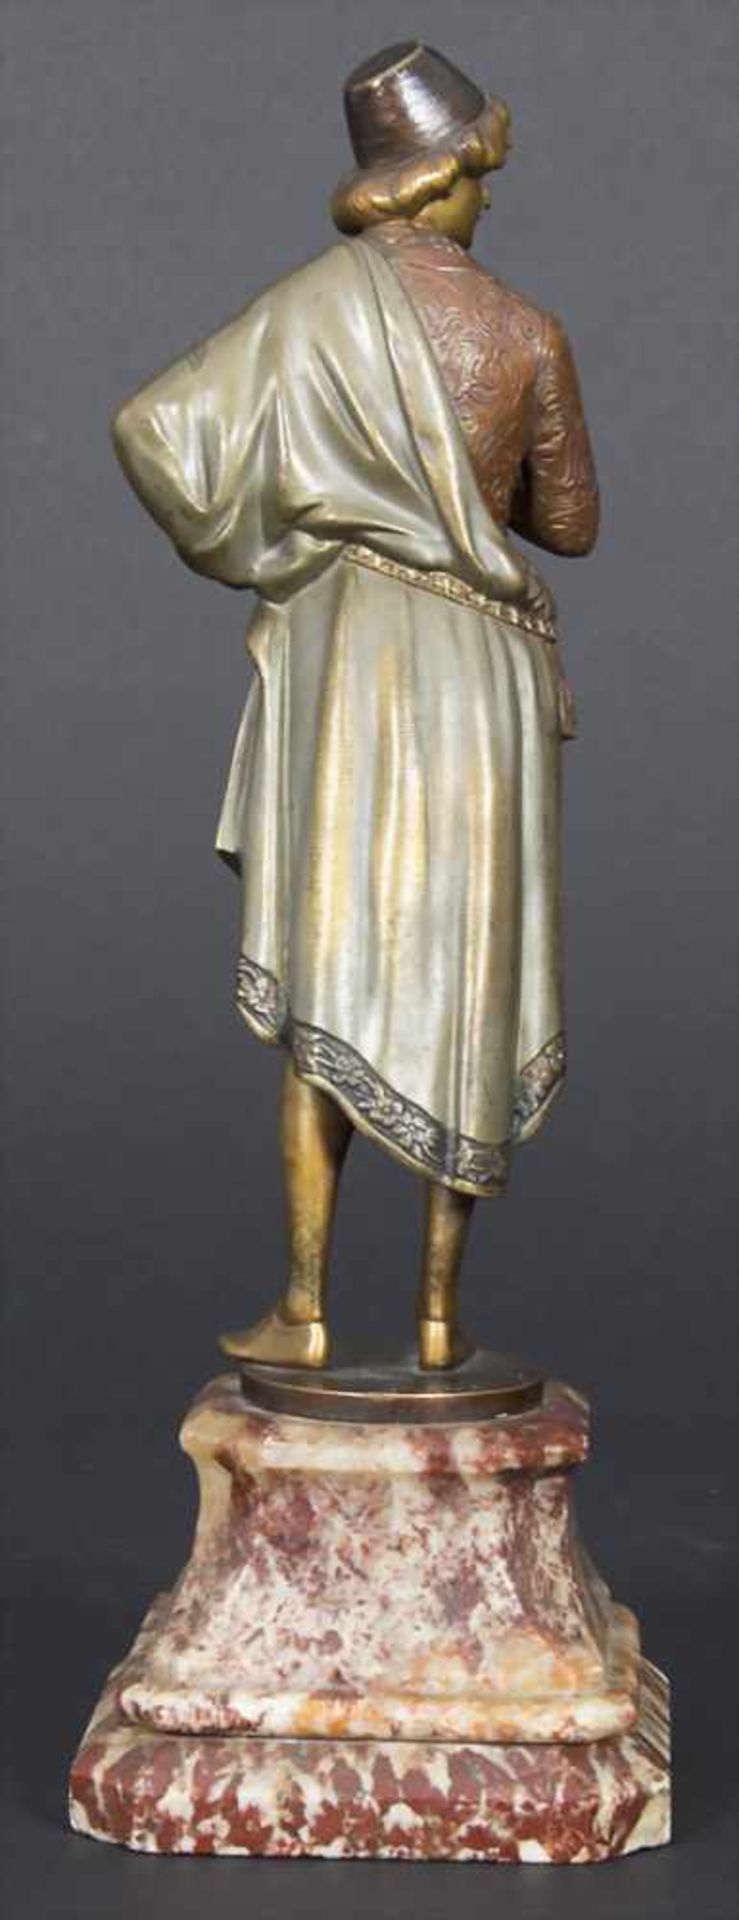 Jugendstil Skulptur, Adliger-Jüngling, Keck Hans (1875-1941)Material: Bronze, polychrom patiniert, - Image 3 of 6